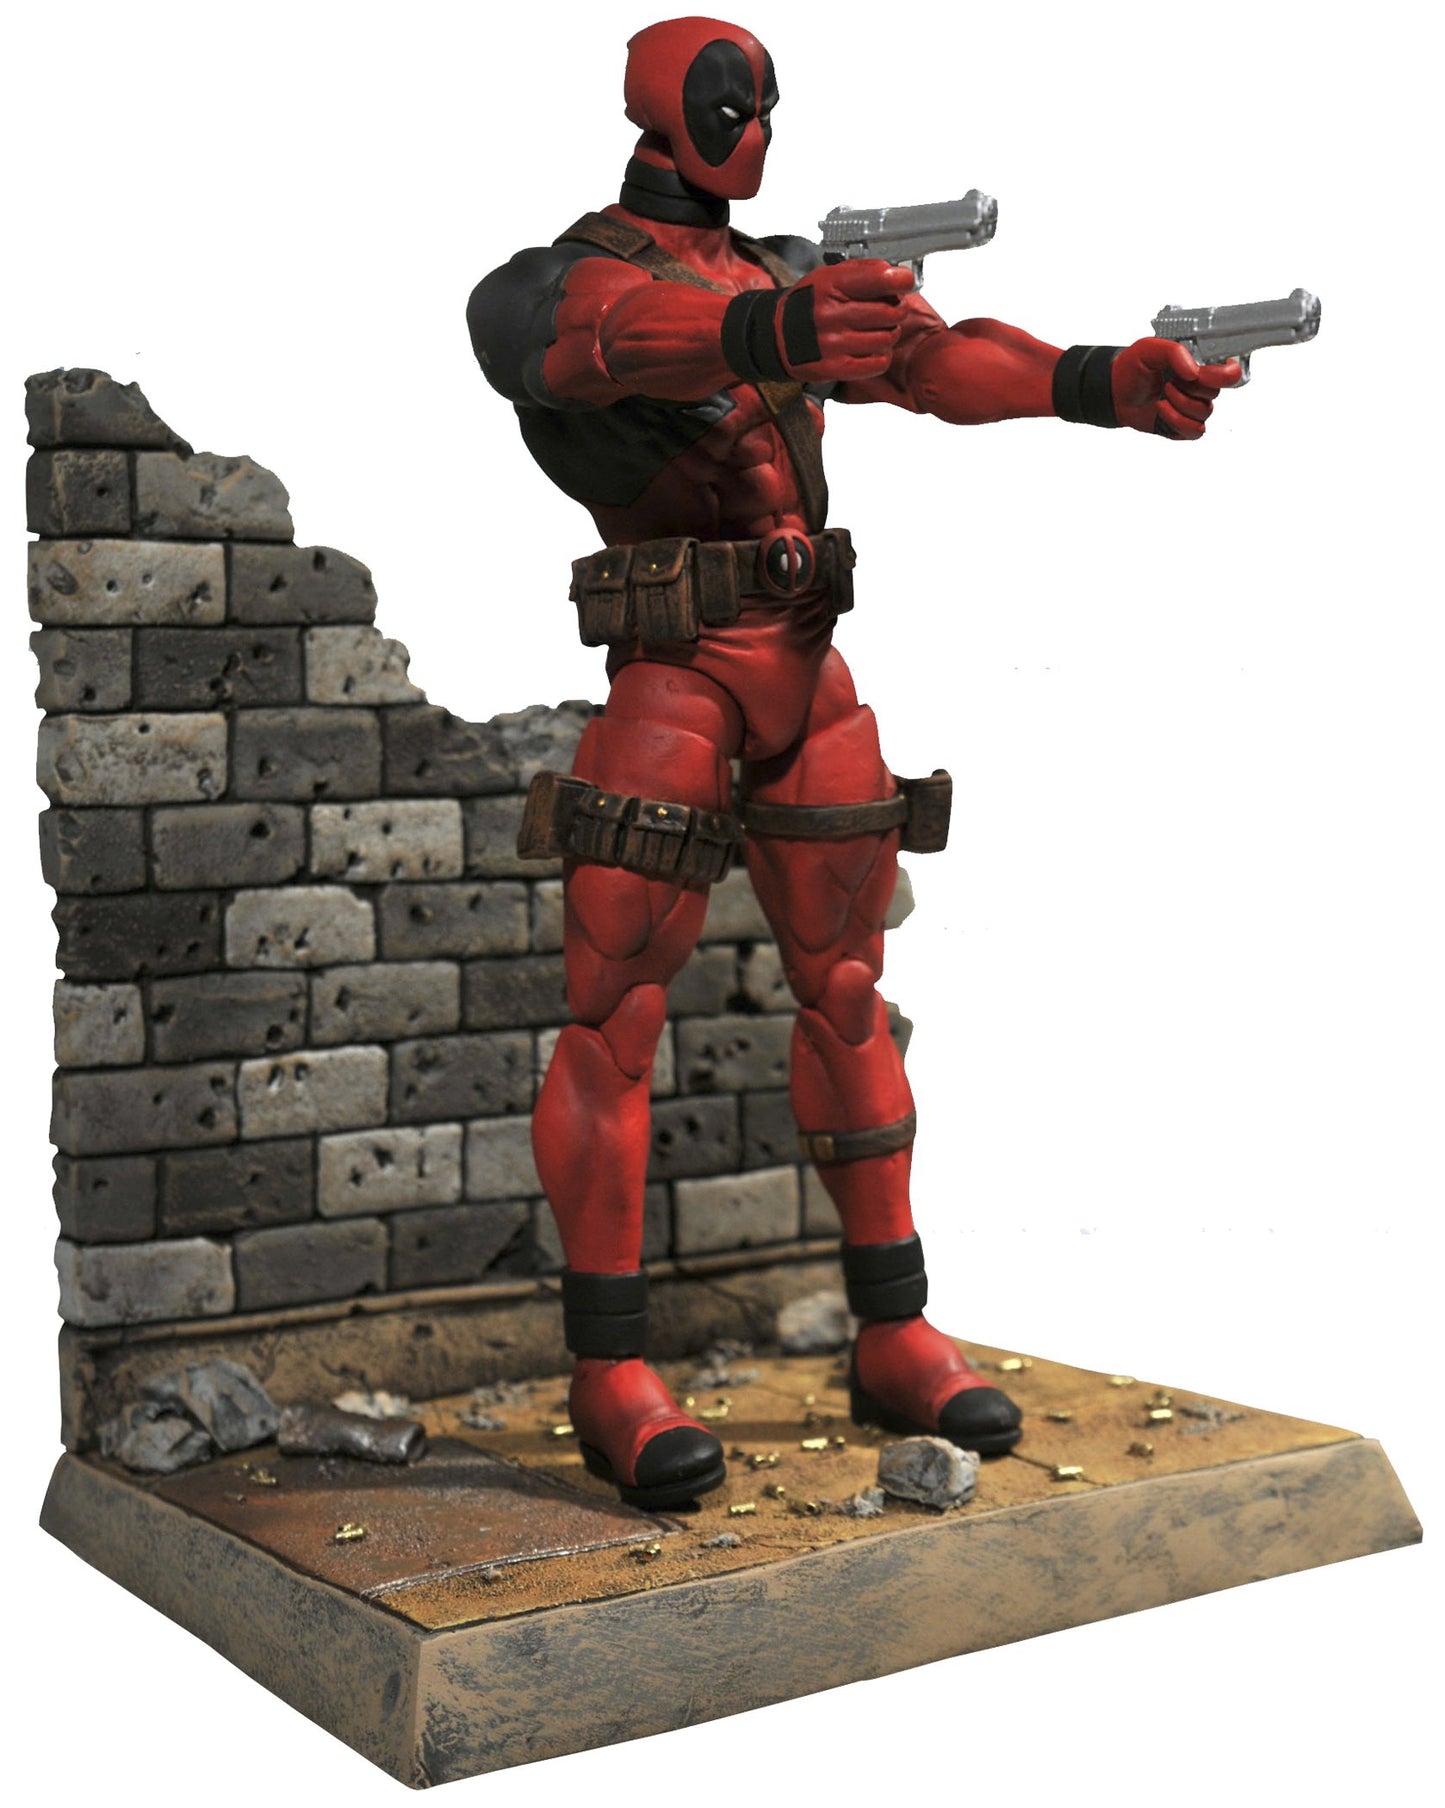 Diamond Select Toys Marvel Select: Deadpool Action Figure,Red,black,Standard